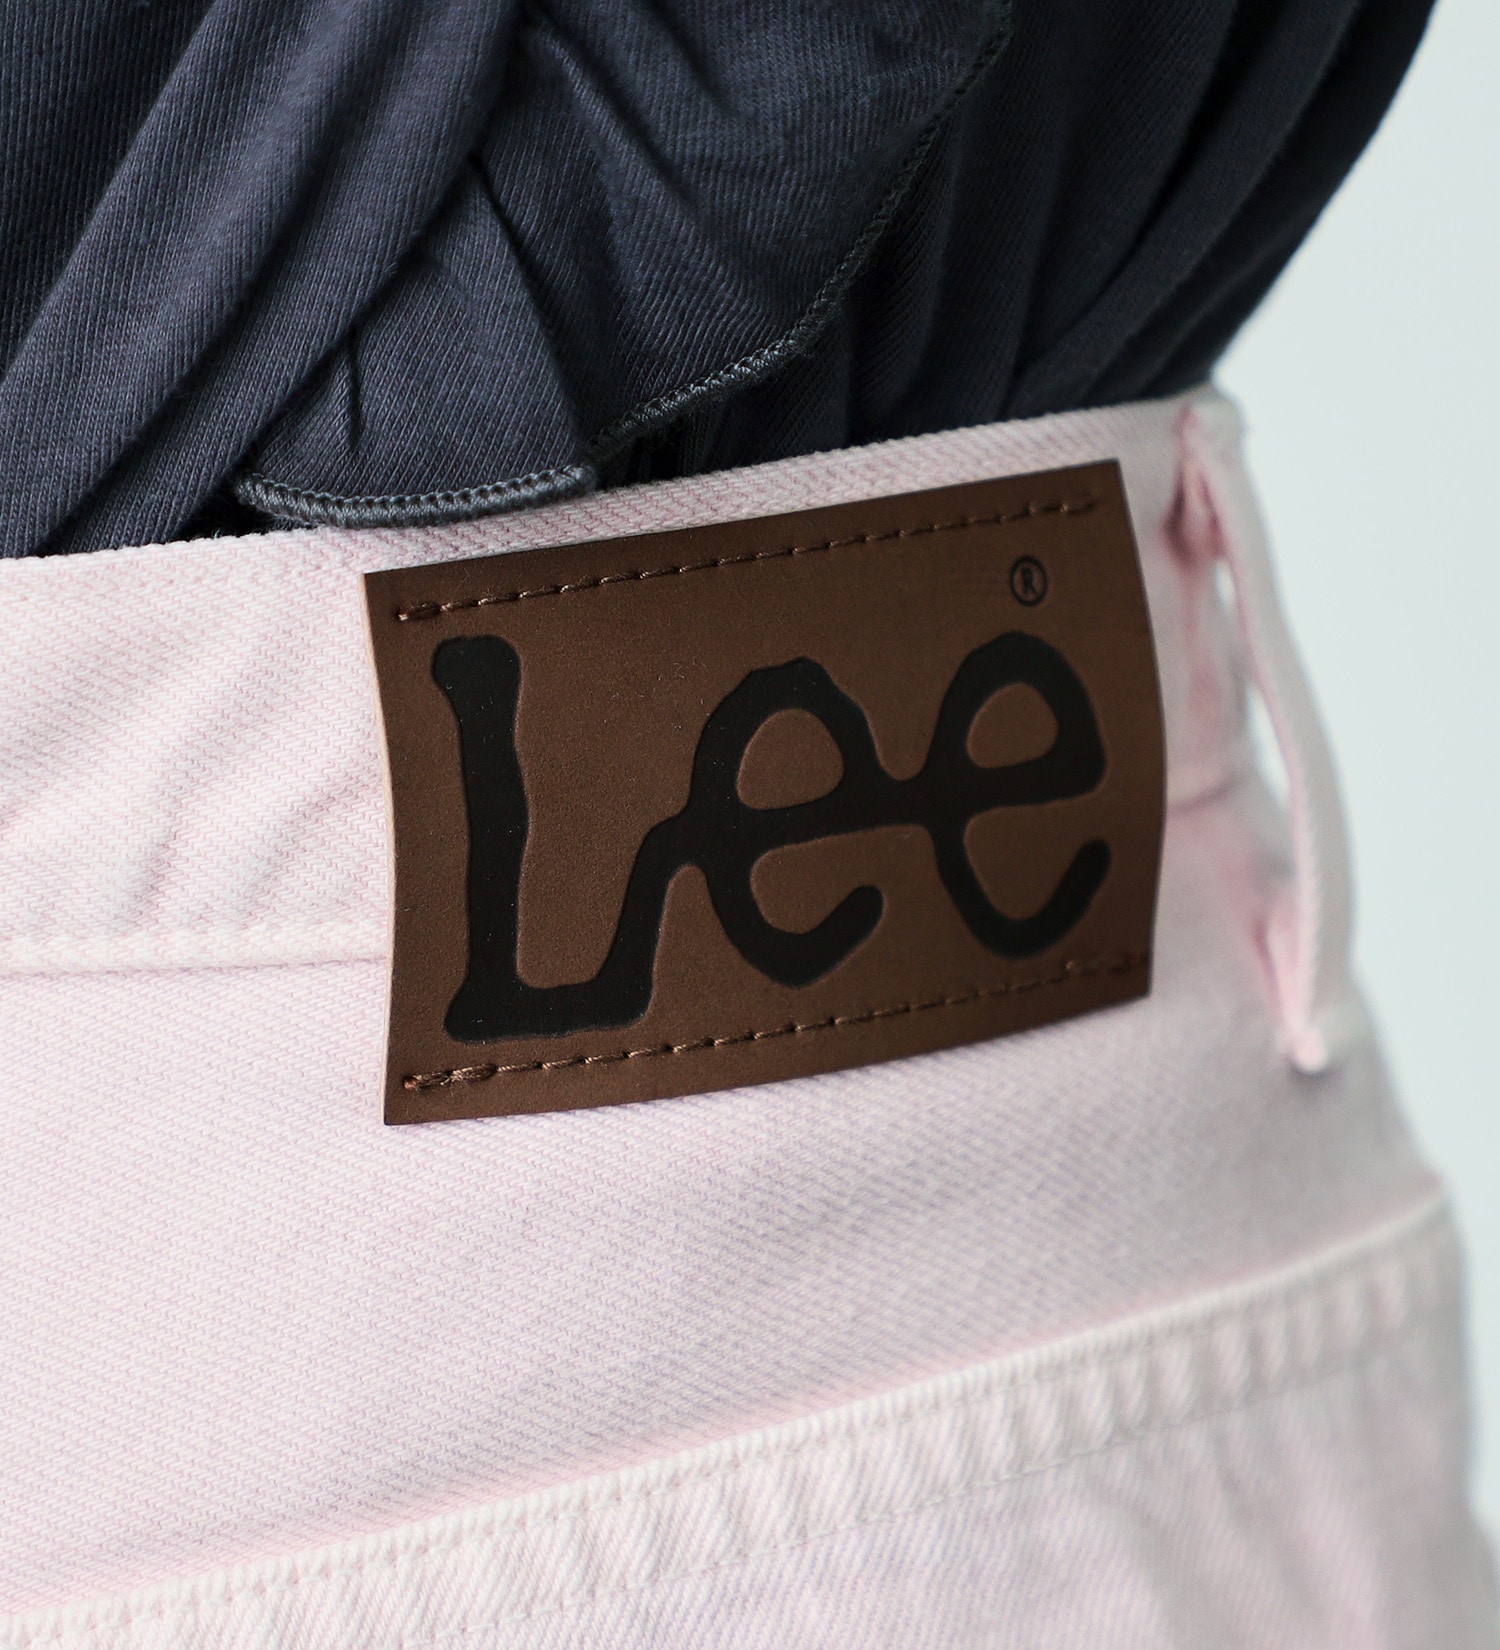 Lee(リー)のSTANDARD WARDROBE テーパードパンツ|パンツ/パンツ/レディース|ピンク